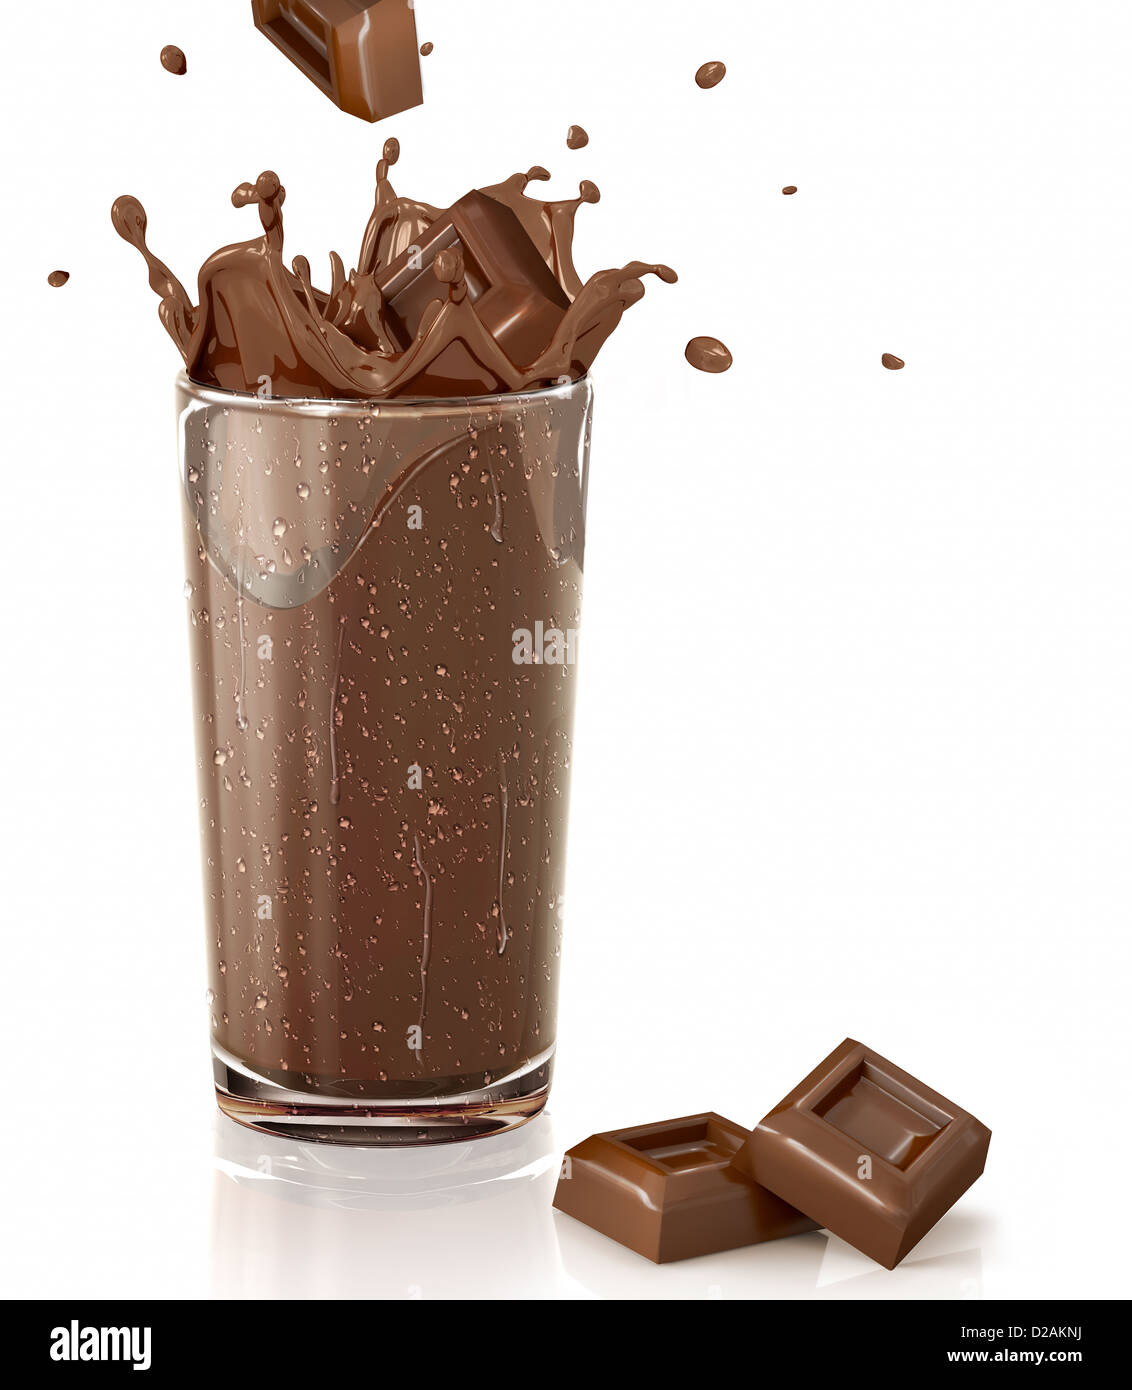 Chocolate cubes splashing into a chocolate milkshake glass. Stock Photo